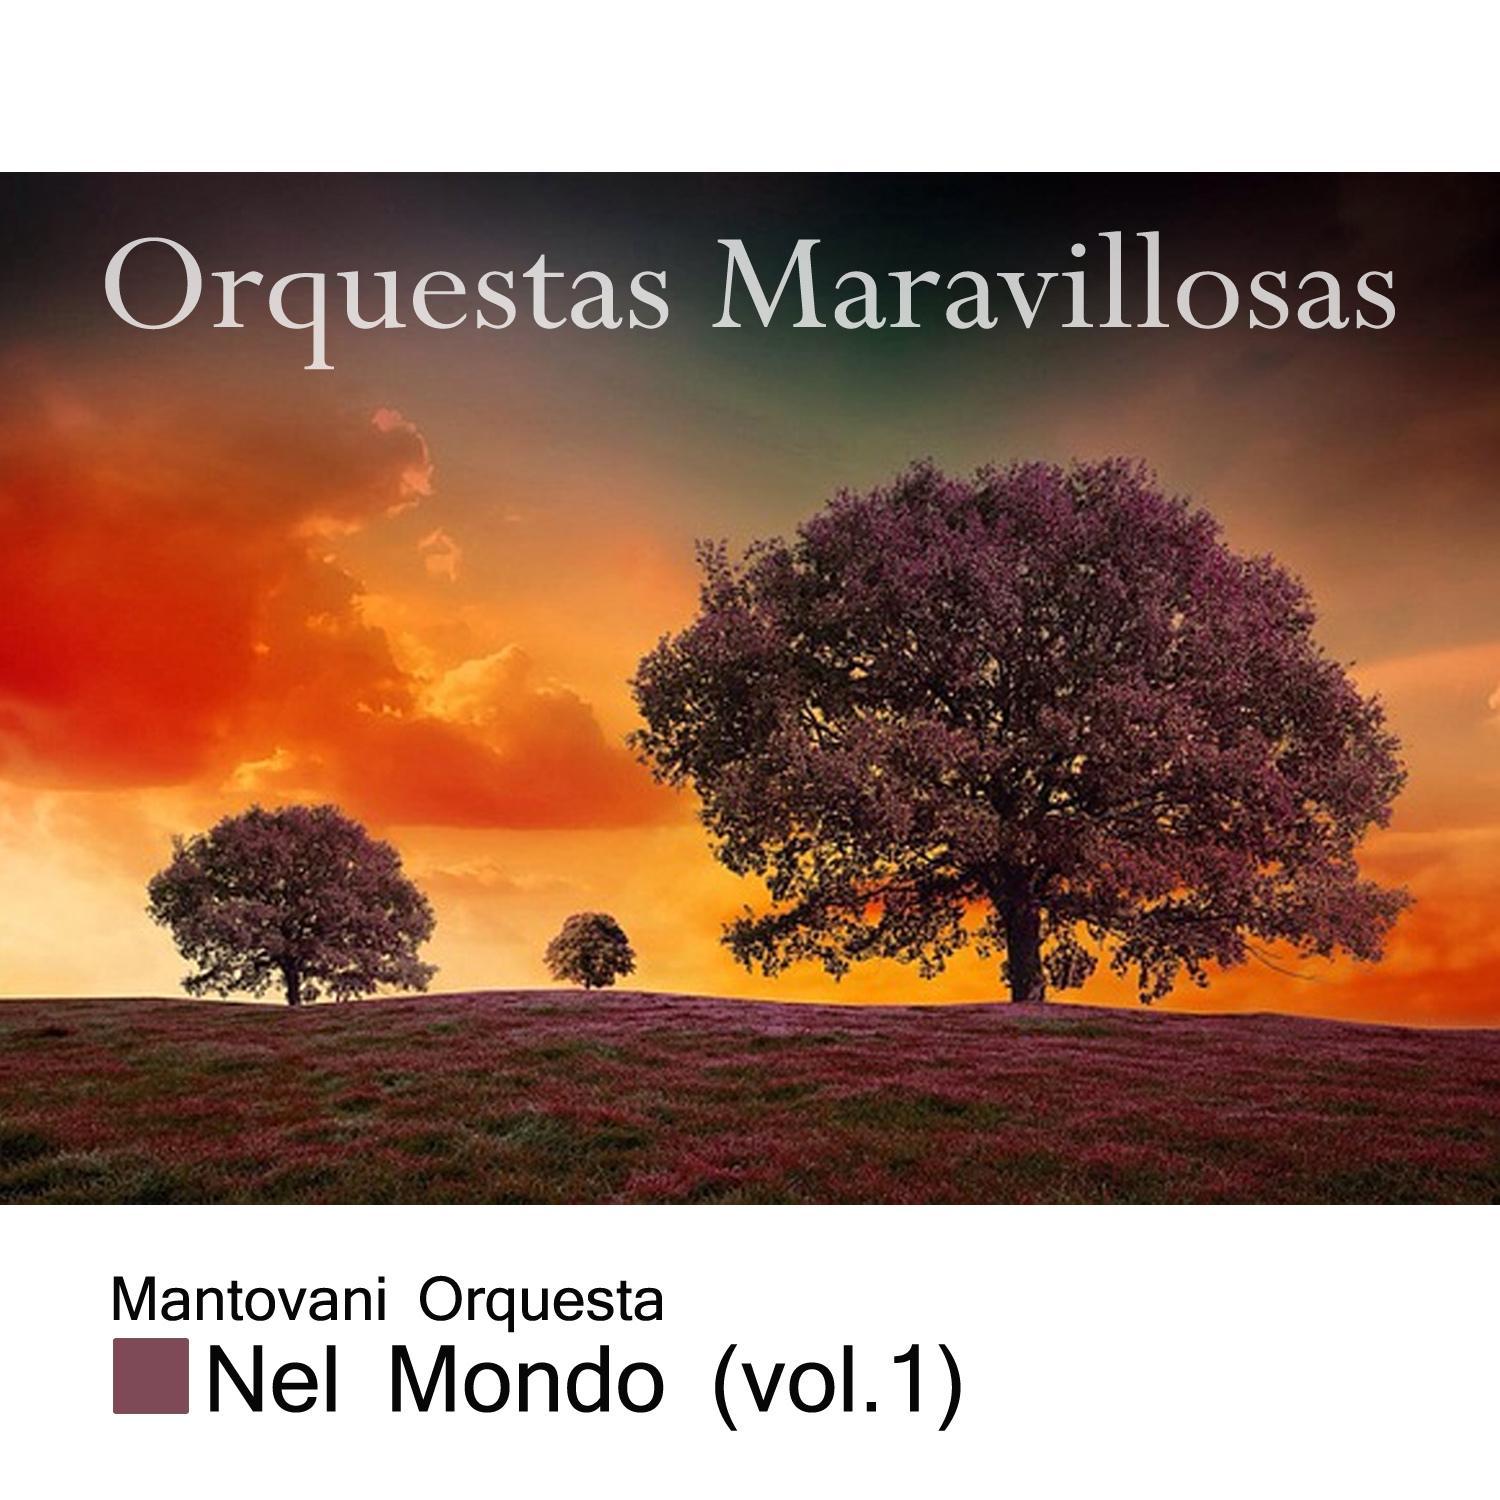 Orquestas Maravillosas, Roma nticas Vol. 1